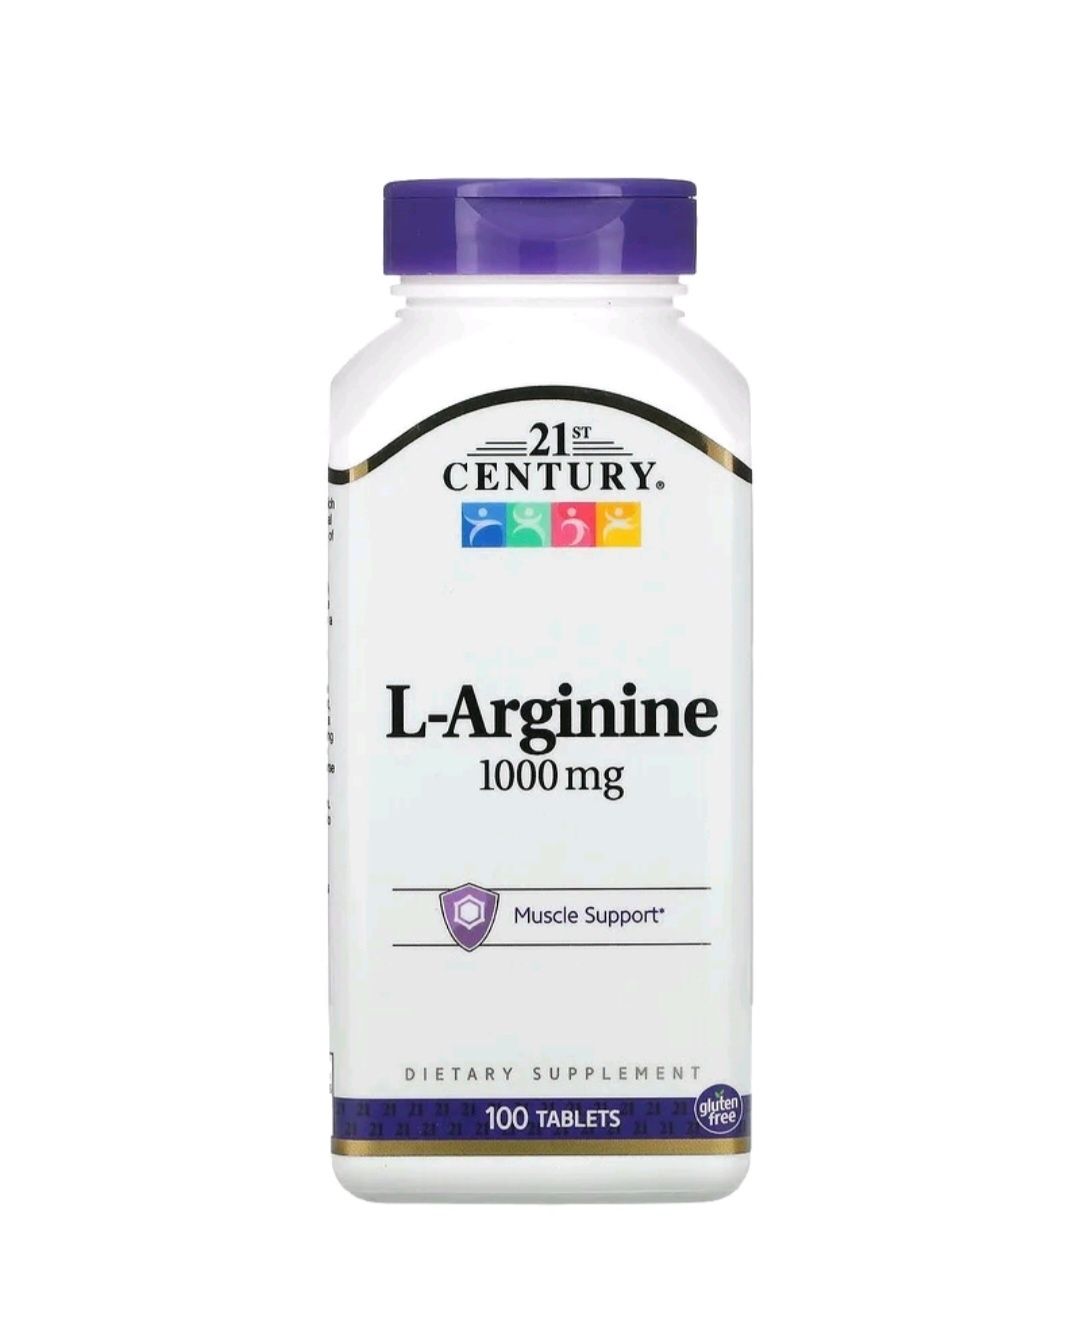 L Arginine 1000mg 100tab 21st Century. л аргинина